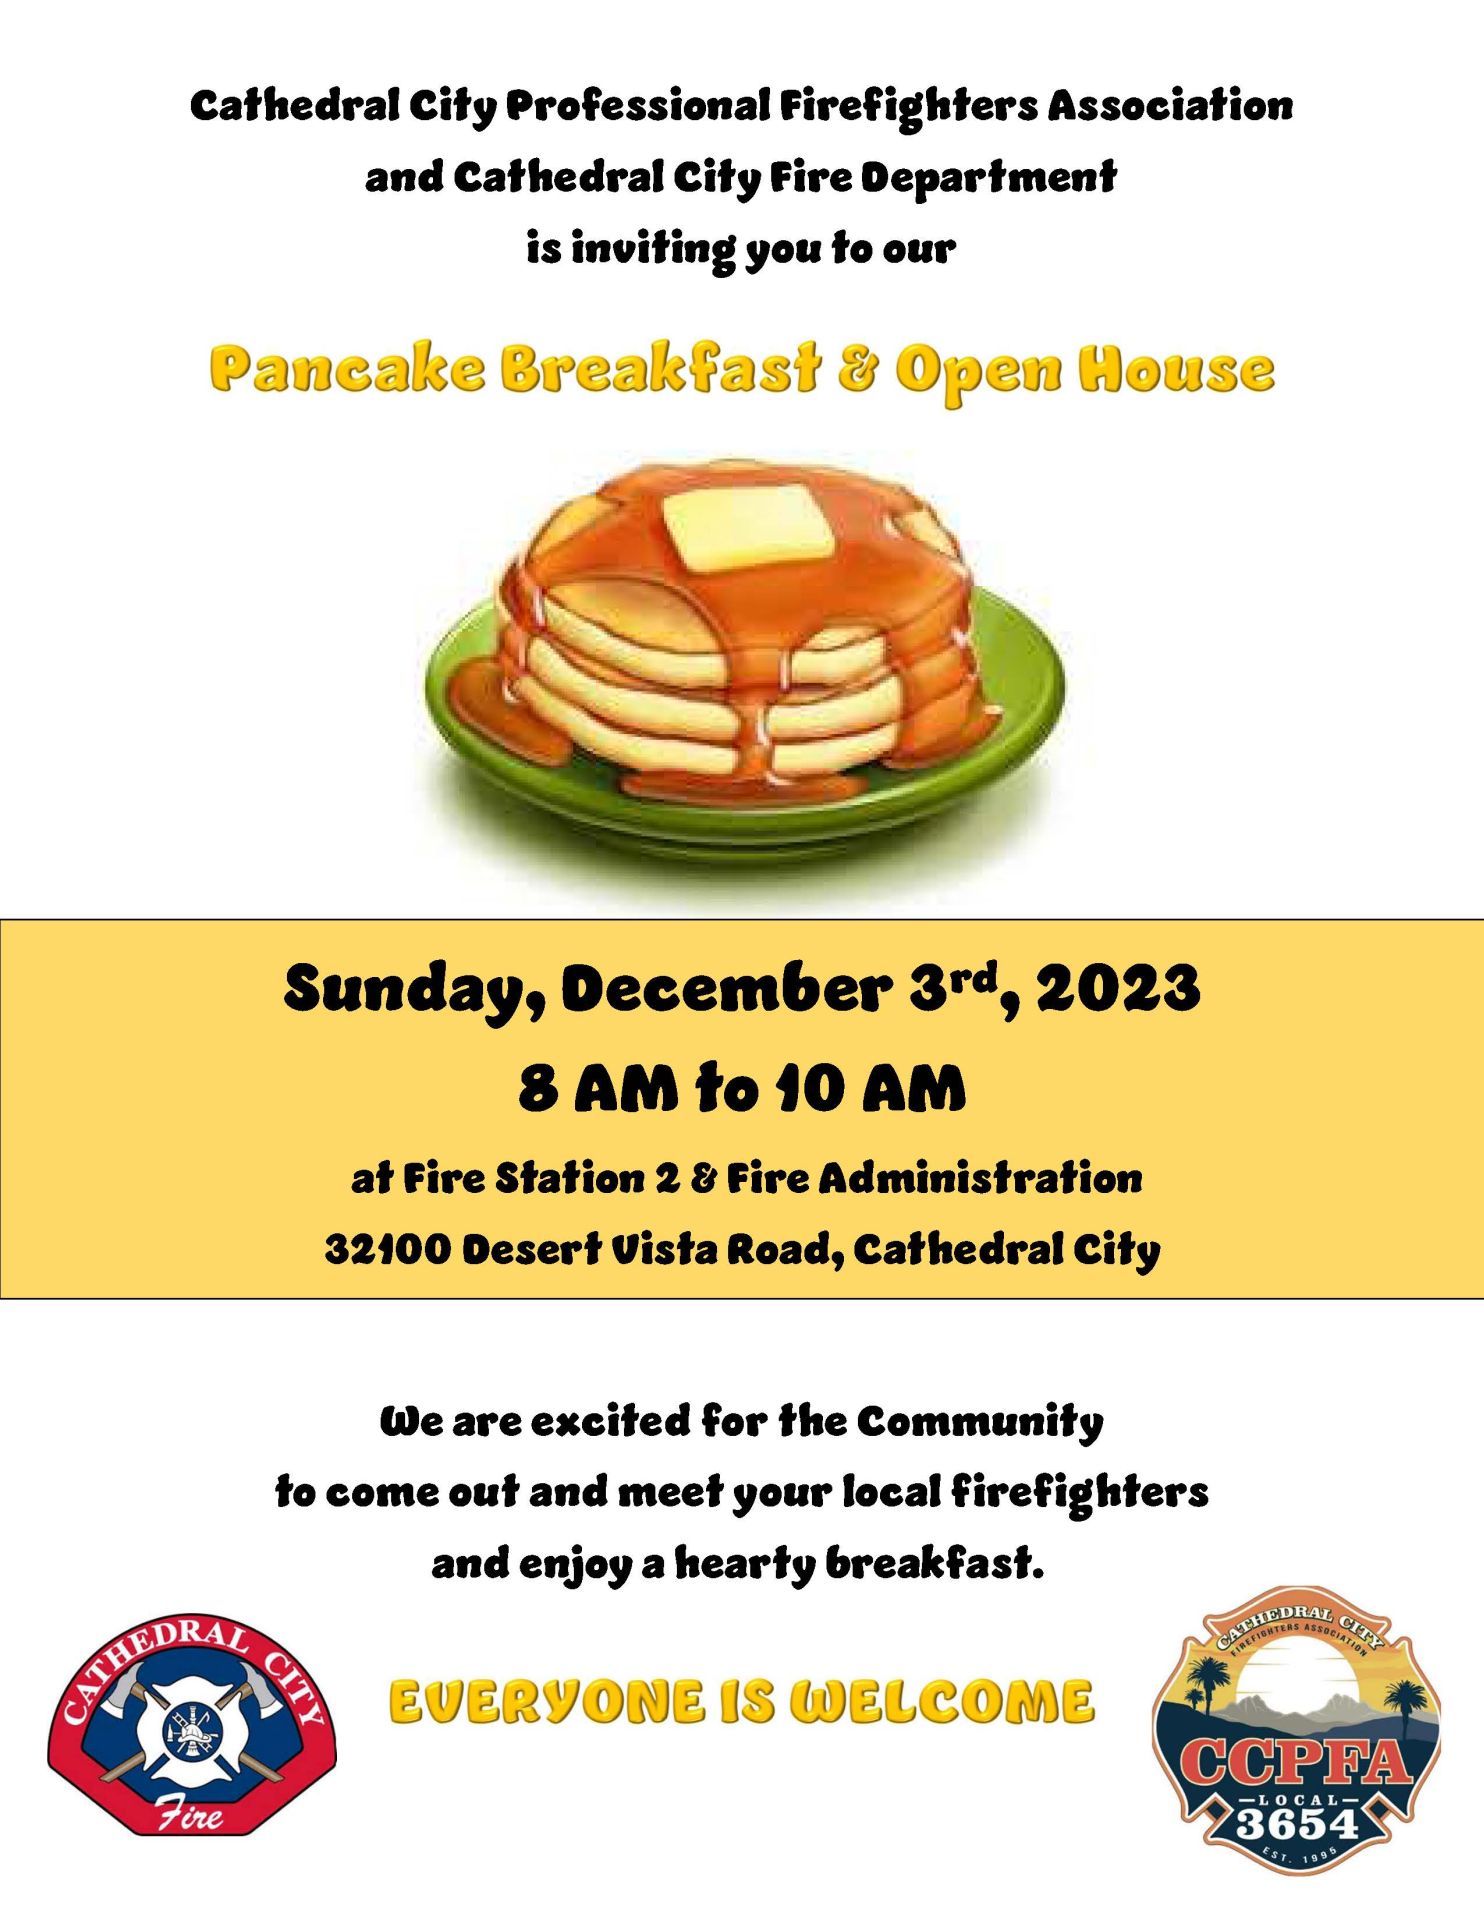 FRIDAY, DECEMBER 24, 2021 Ad - Big Skillet Restaurant & Pancake House -  Daily Herald (Paddock)